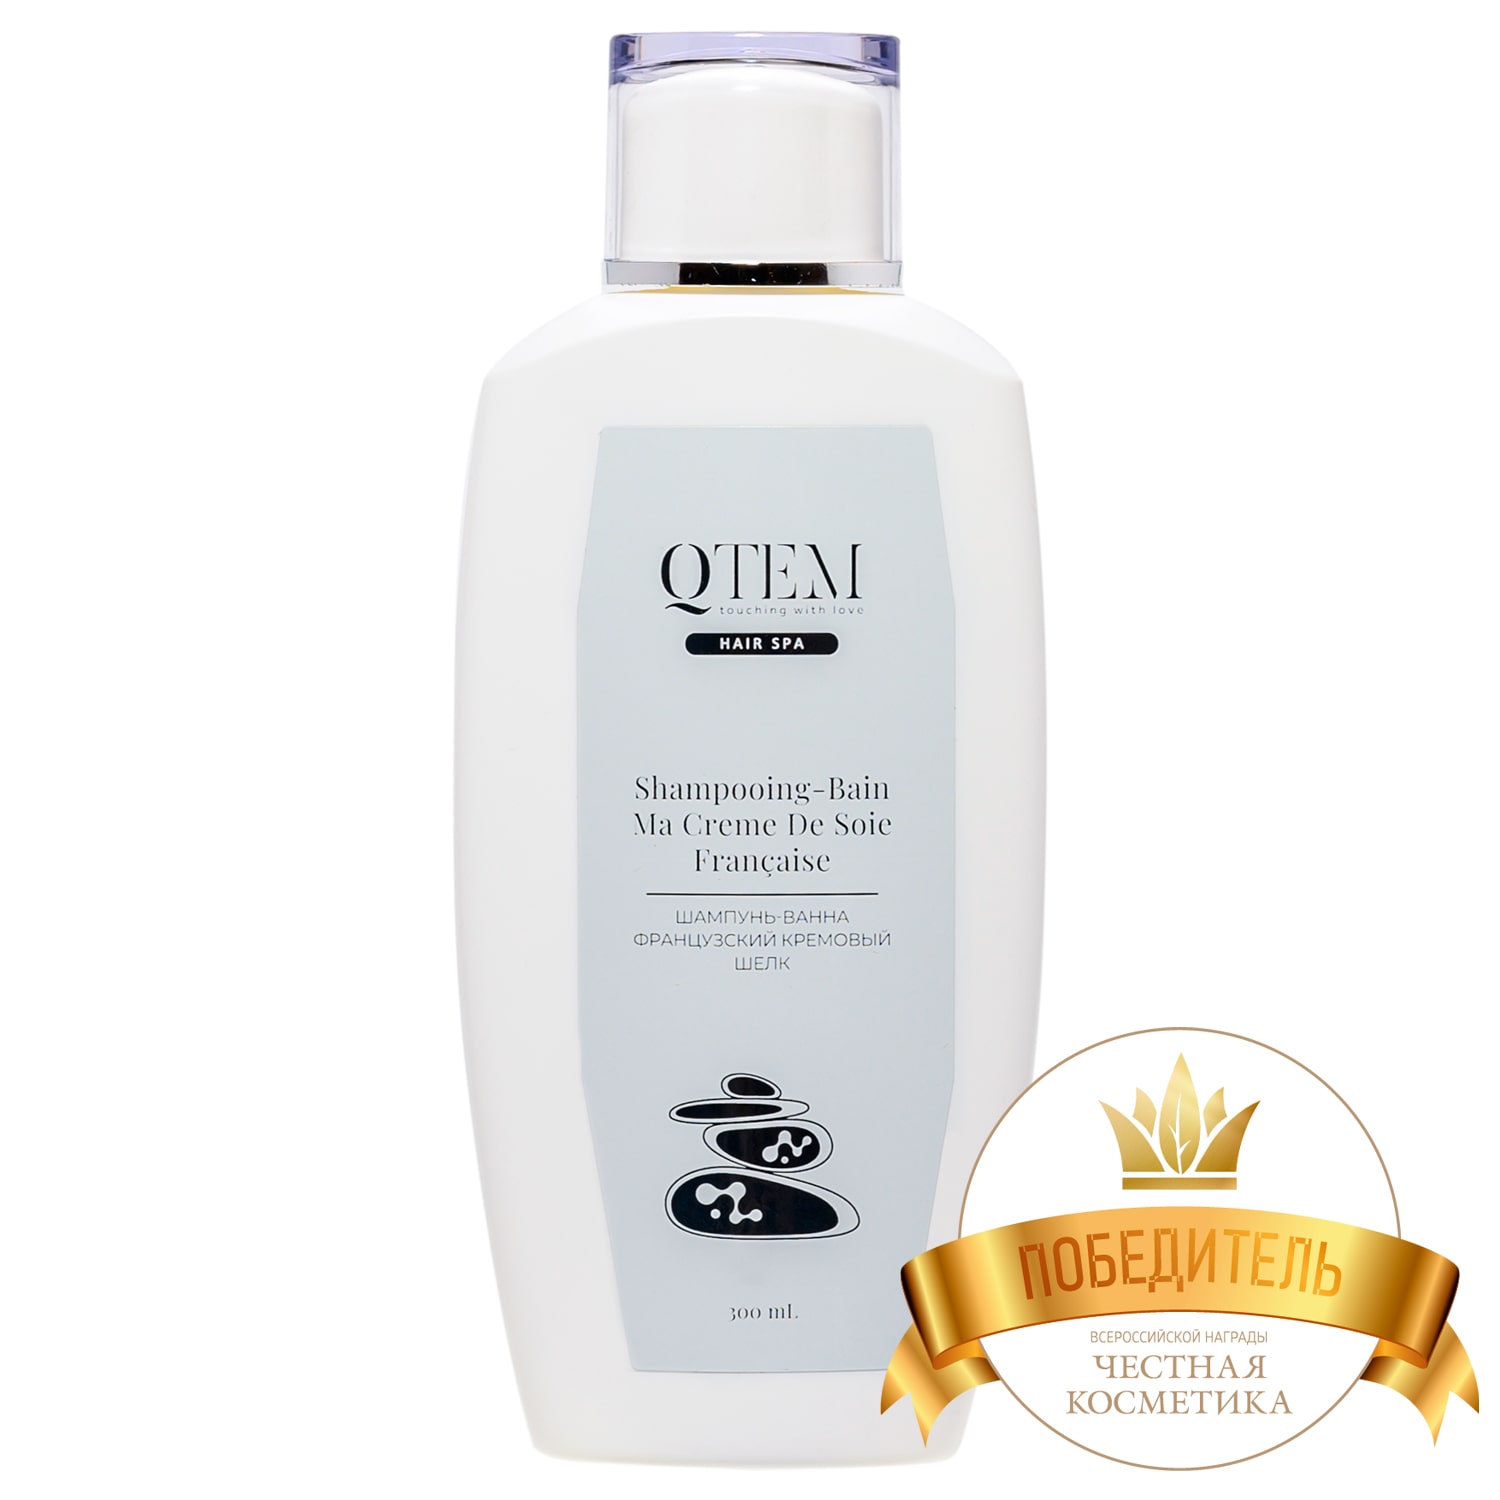 Qtem Шампунь-ванна для волос и тела Французский кремовый шелк Shampooing-Bain Ma Crème De Soie Francaise, 300 мл (Qtem, Hair Spa)